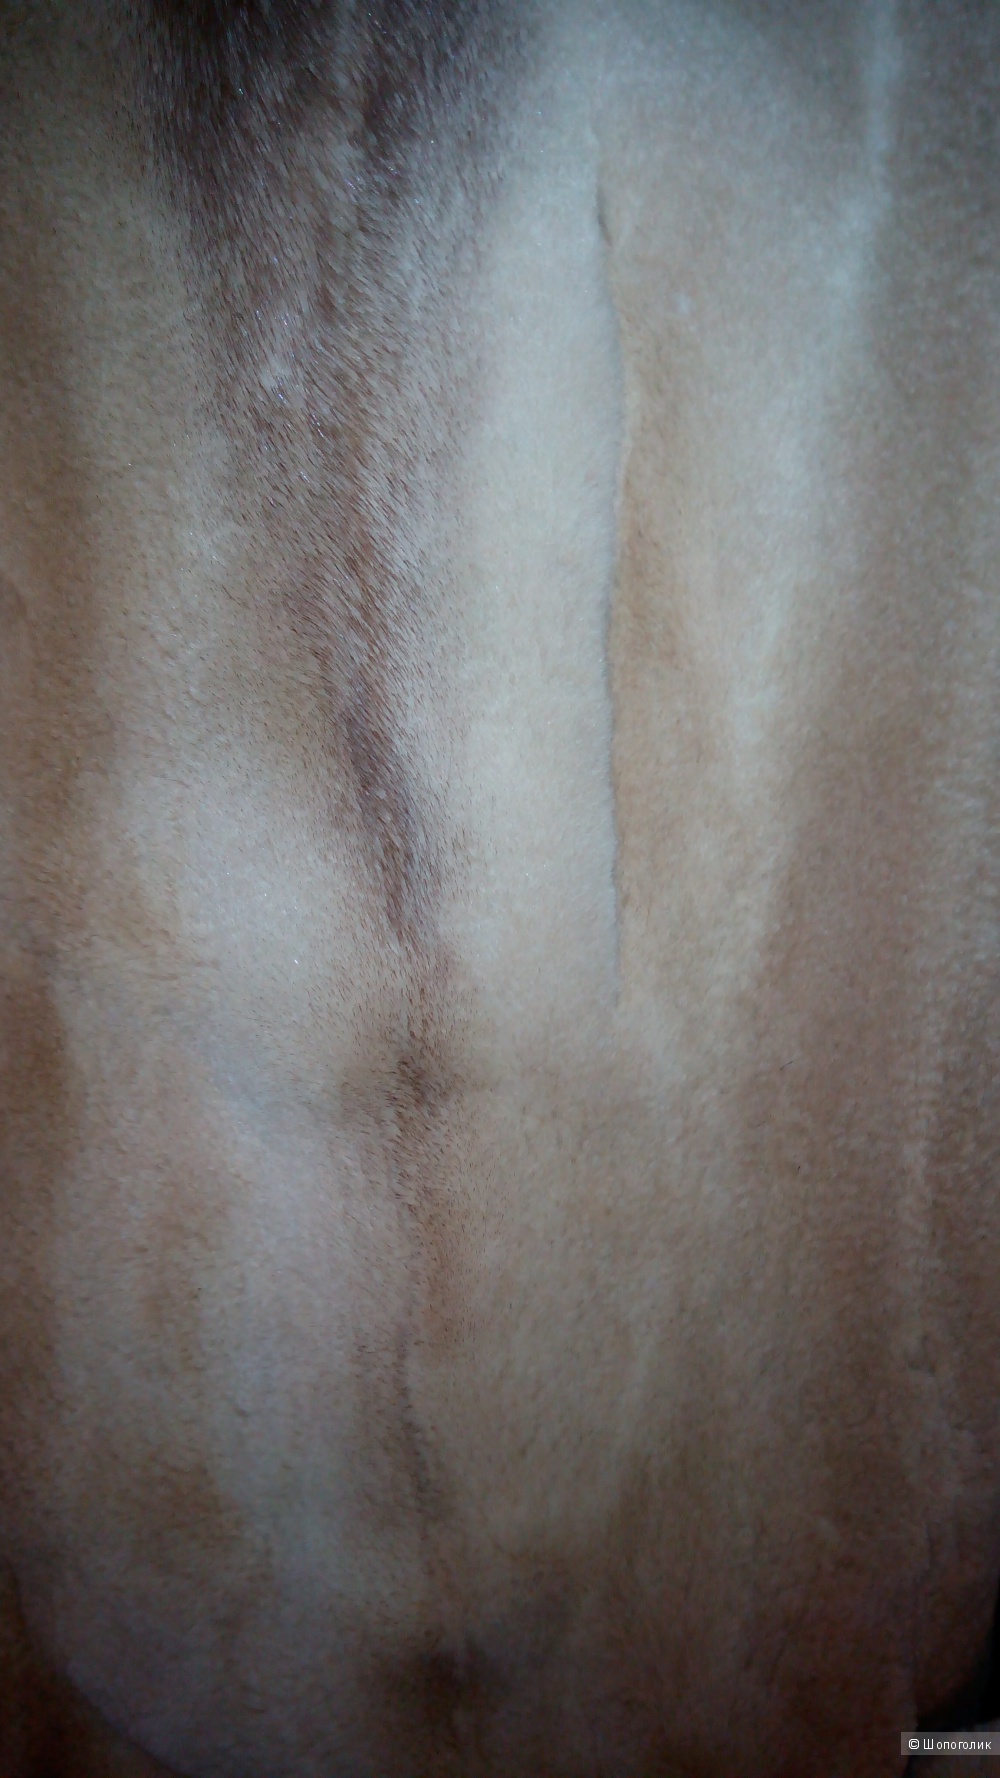 Полушубок из норки RT Quality Furs , размер S-M